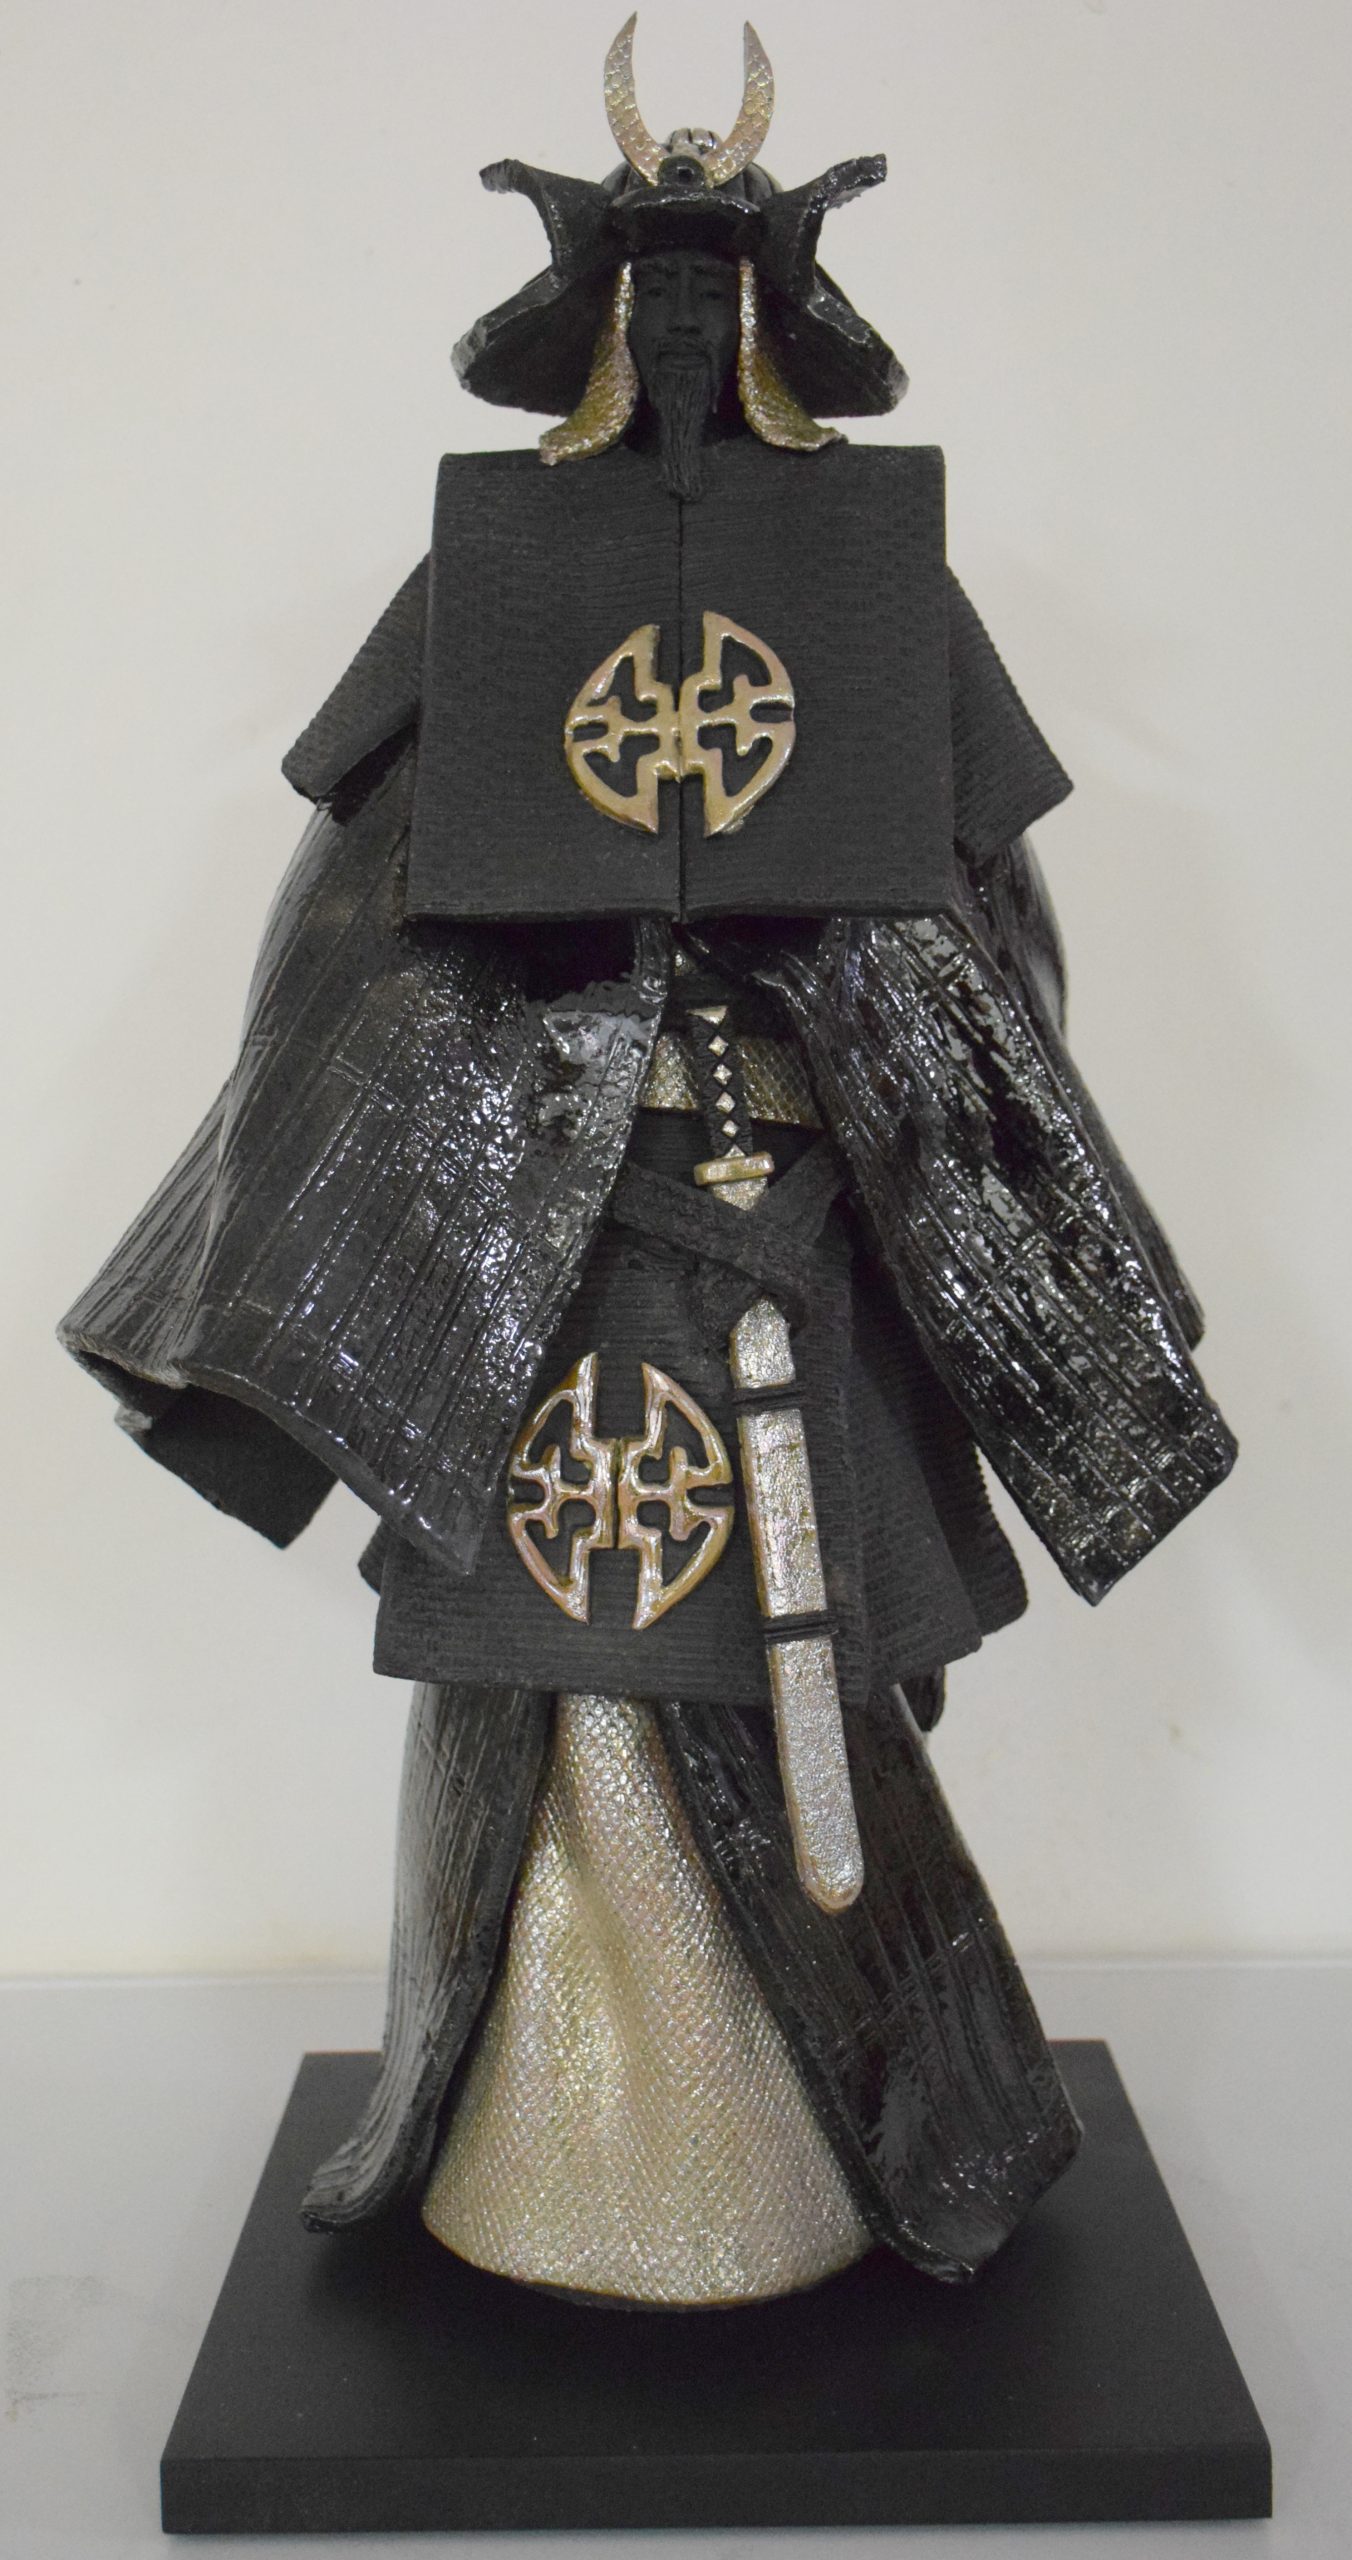 Raku costume noir .2 de l'artiste Paul Beckich à la Galerie MANER